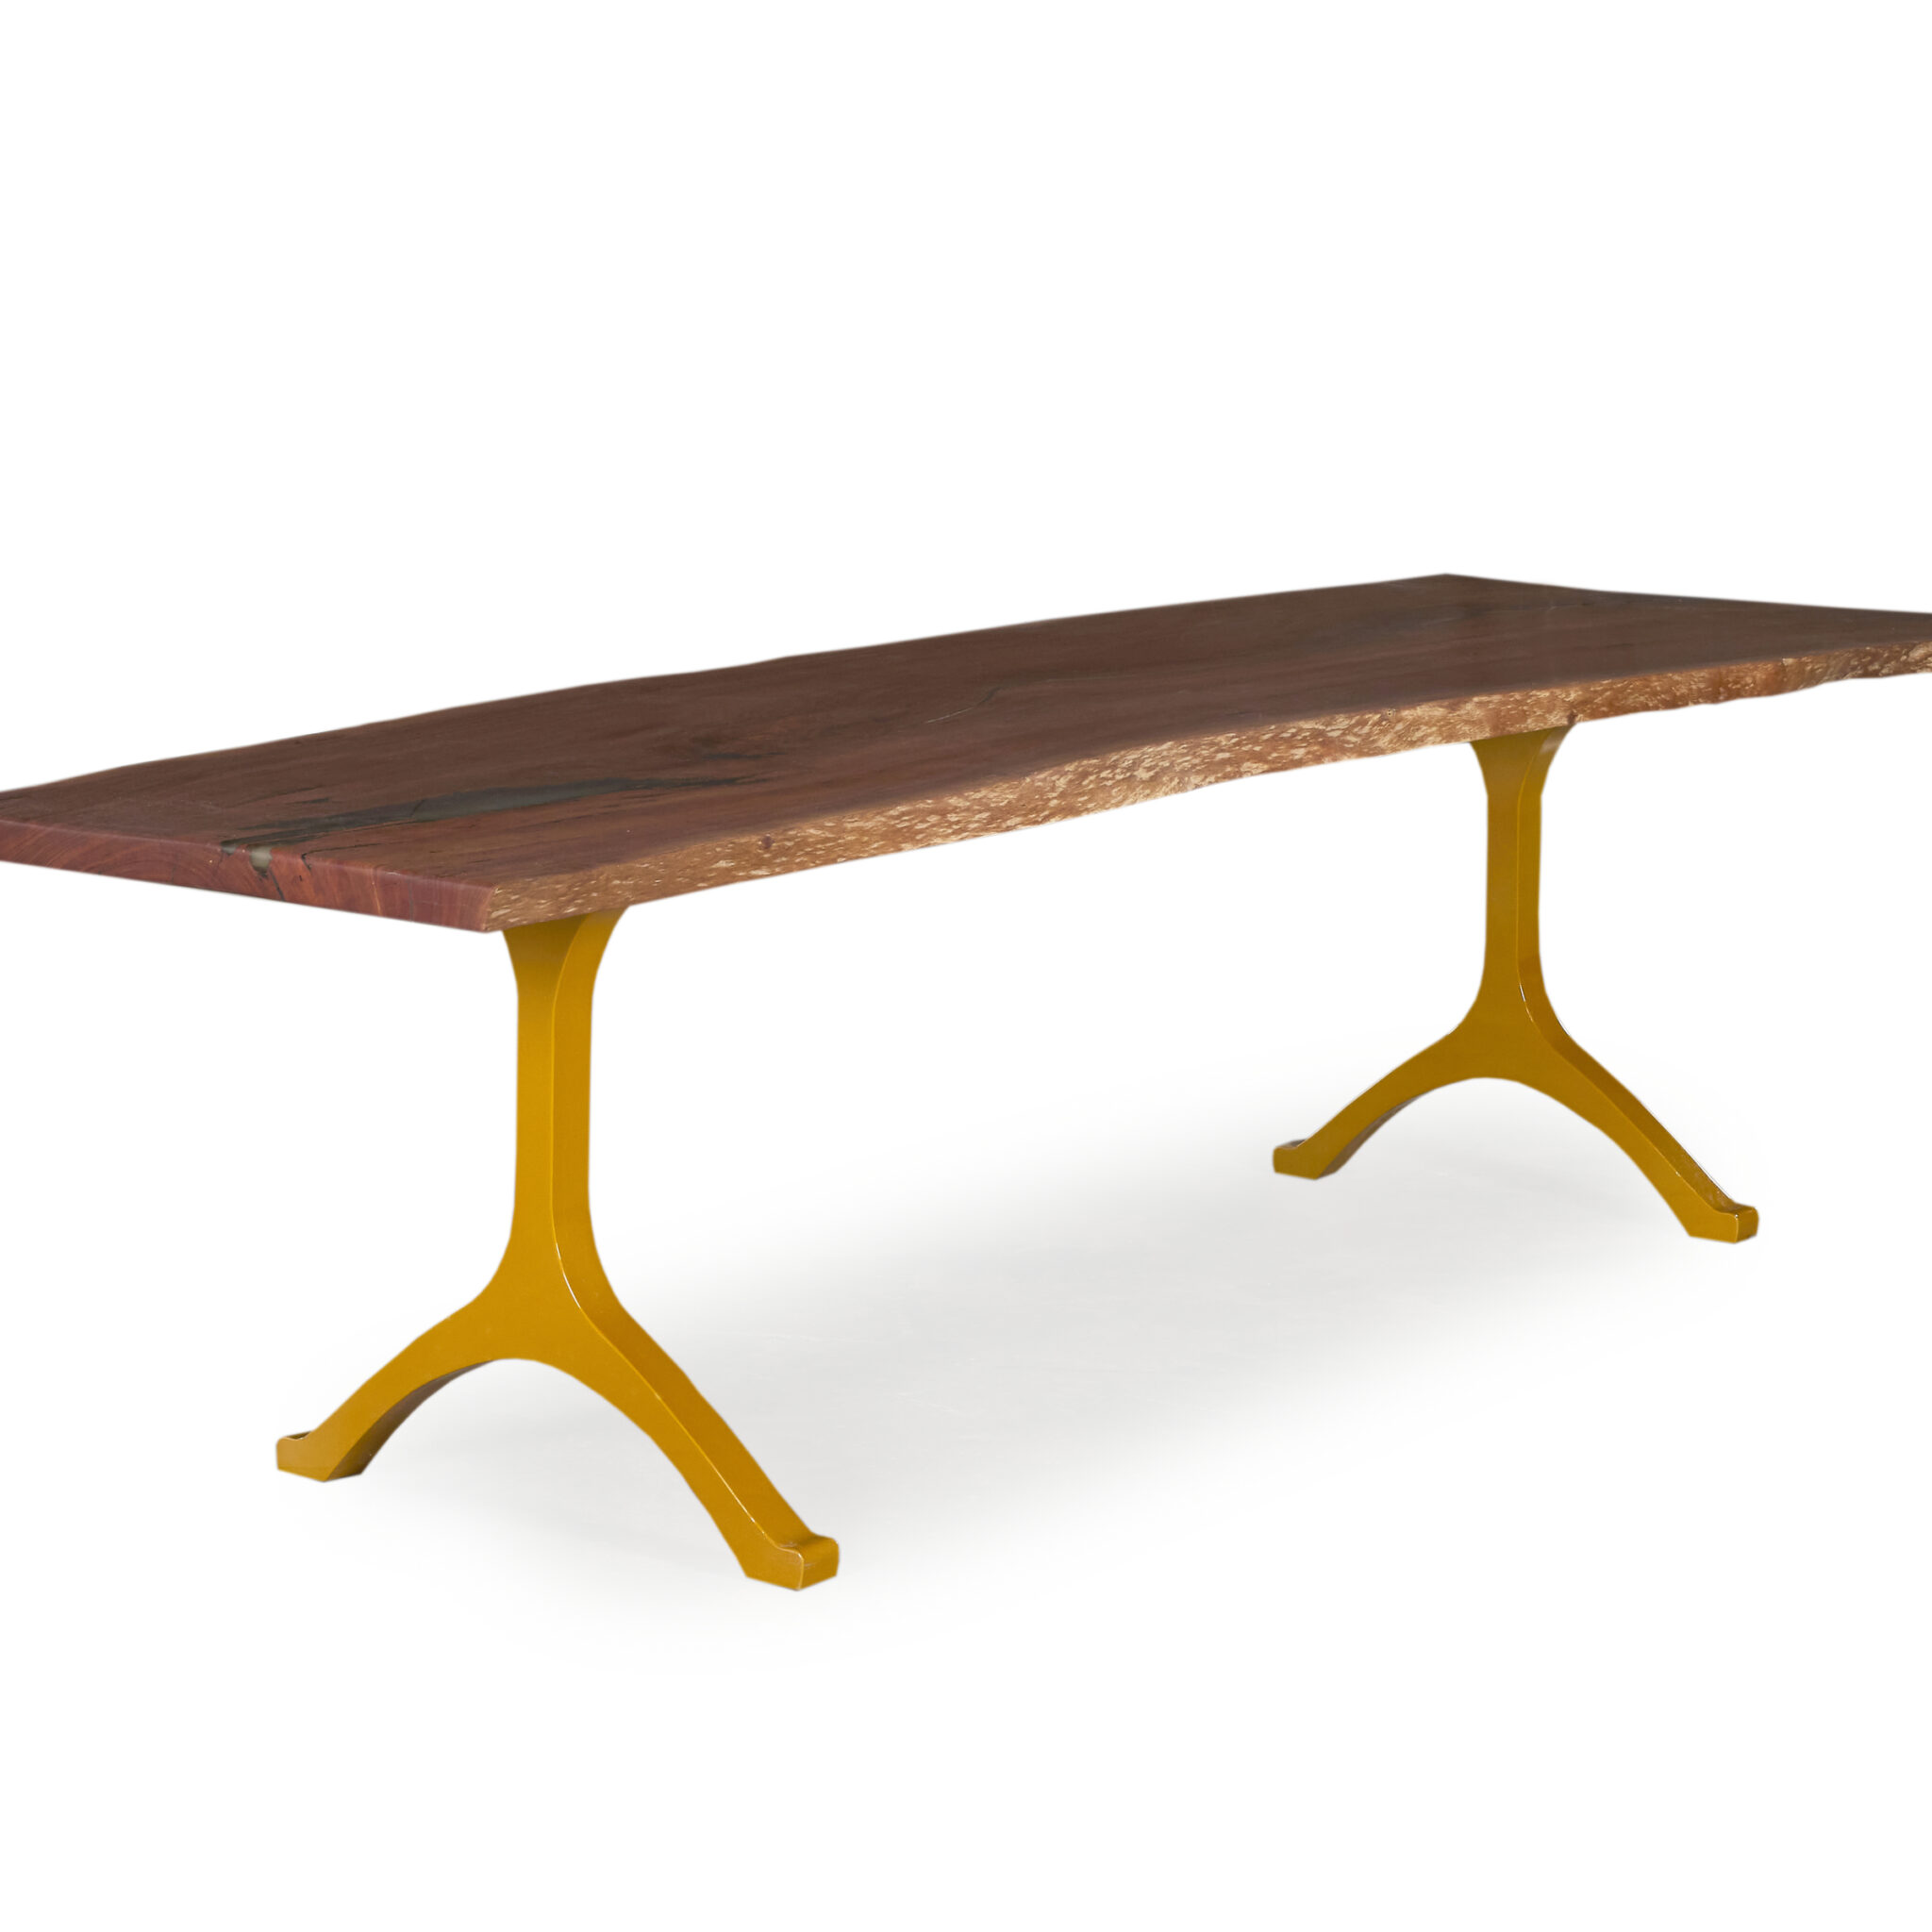 Mosman Dining Table - Redgum timber, natural edge design, Wishbone Leg Gold base